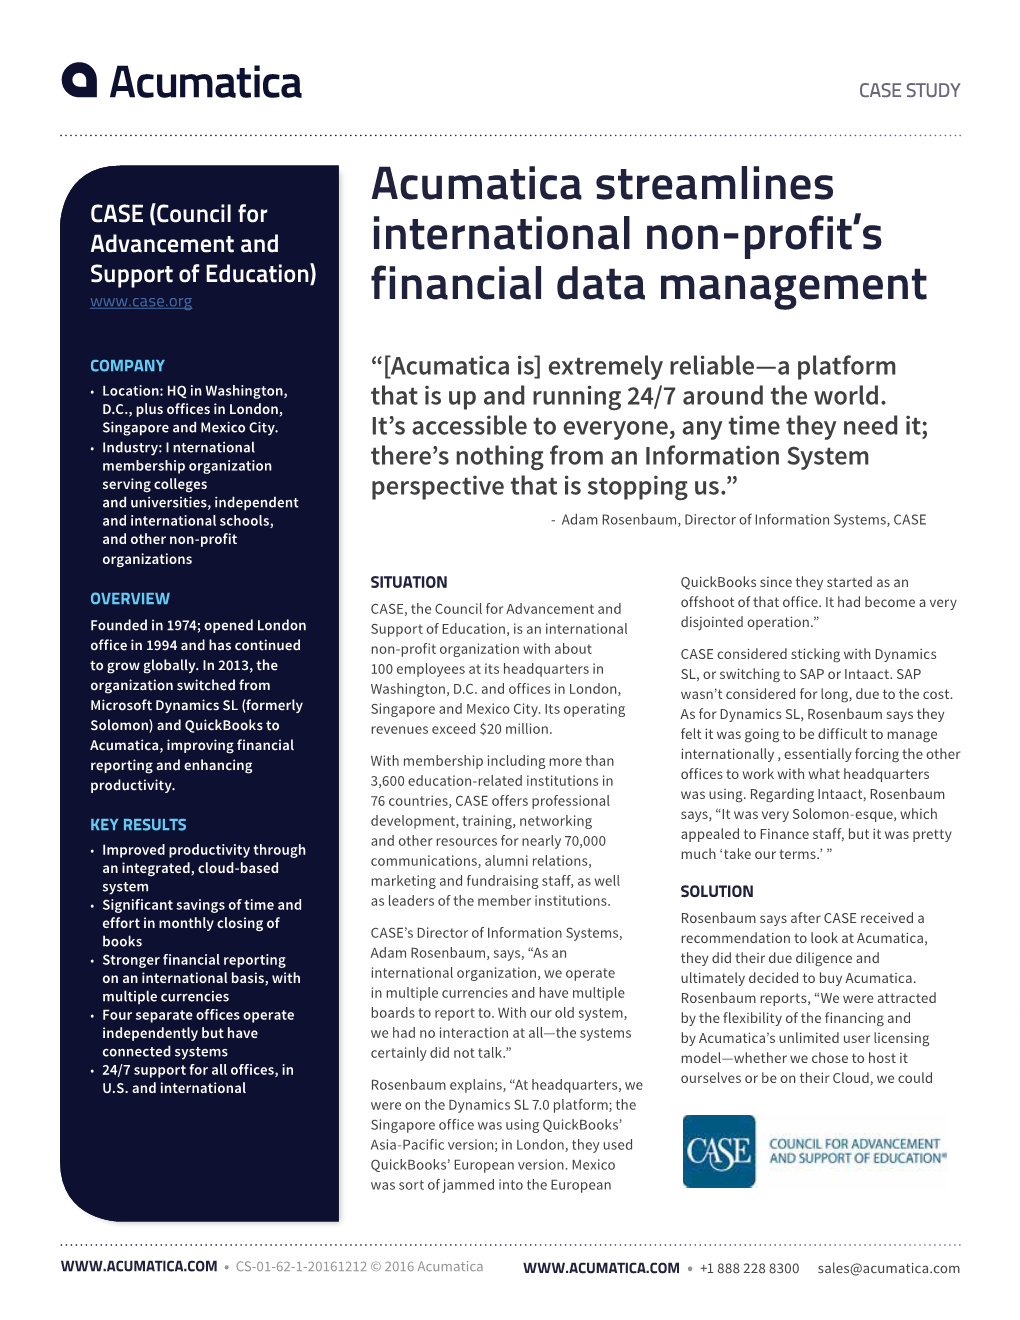 Acumatica Streamlines International Non-Profit's Financial Data Management